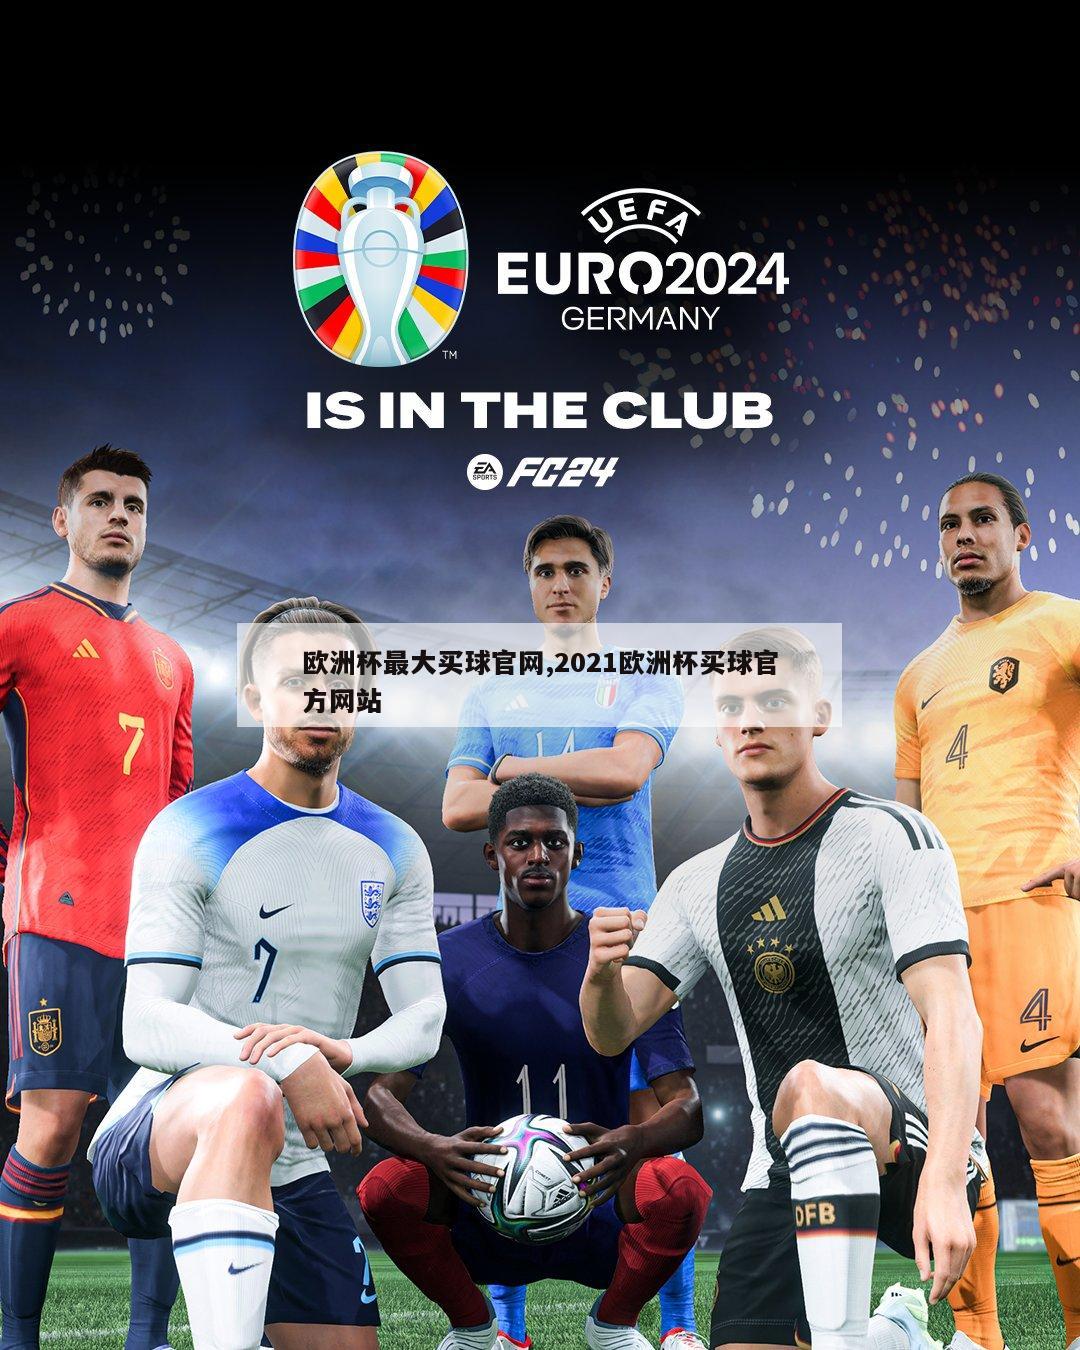 欧洲杯最大买球官网,2021欧洲杯买球官方网站